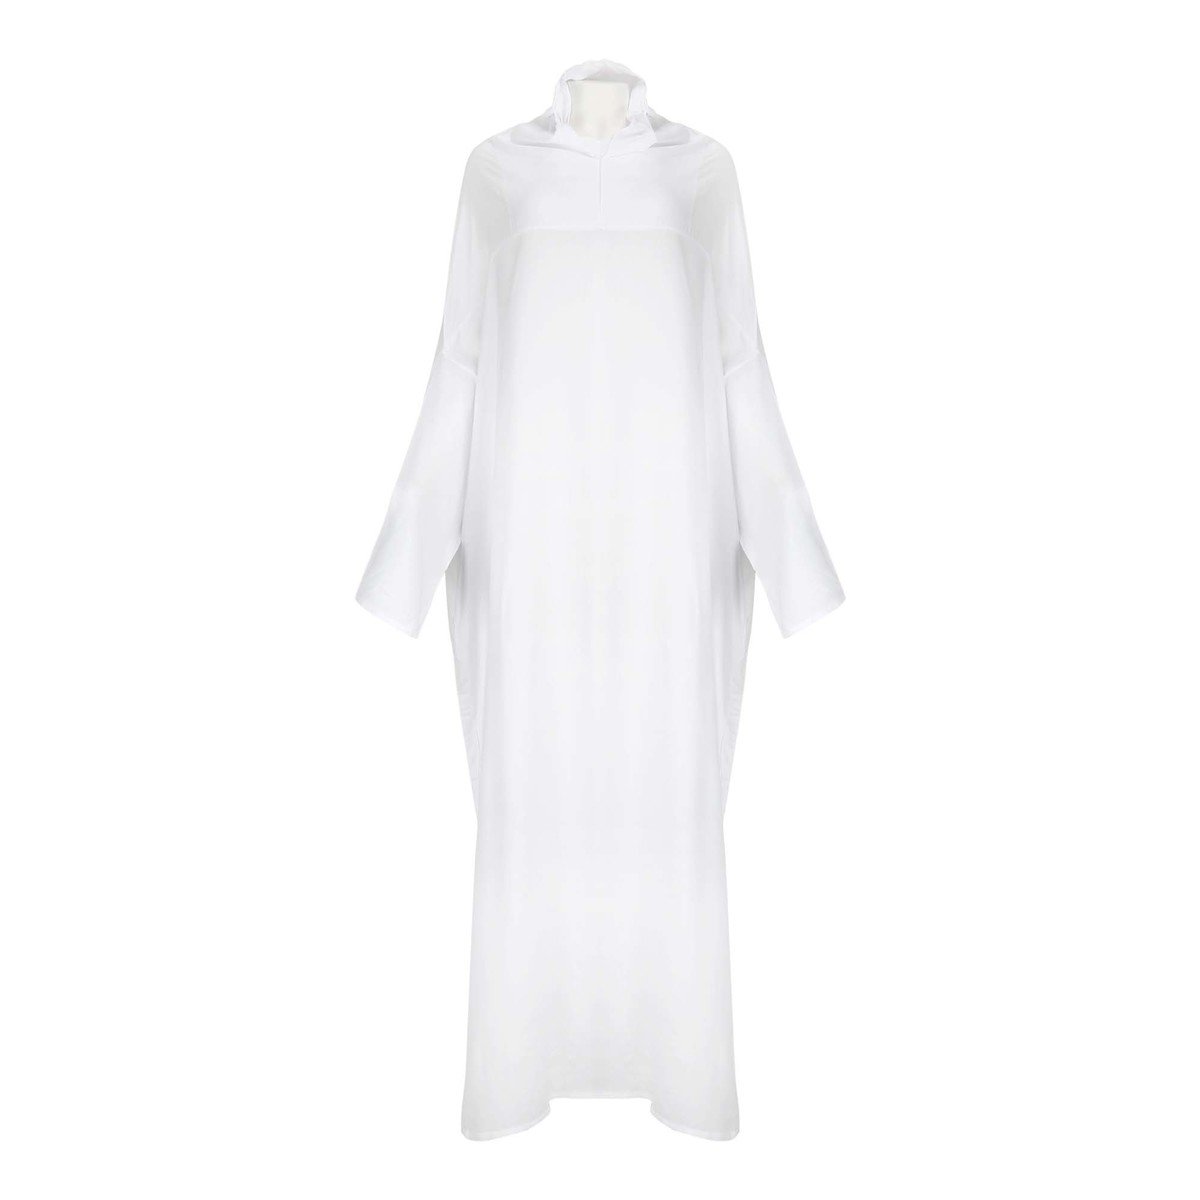 Cortigiani Teenage Prayer Dress A401 White Medium